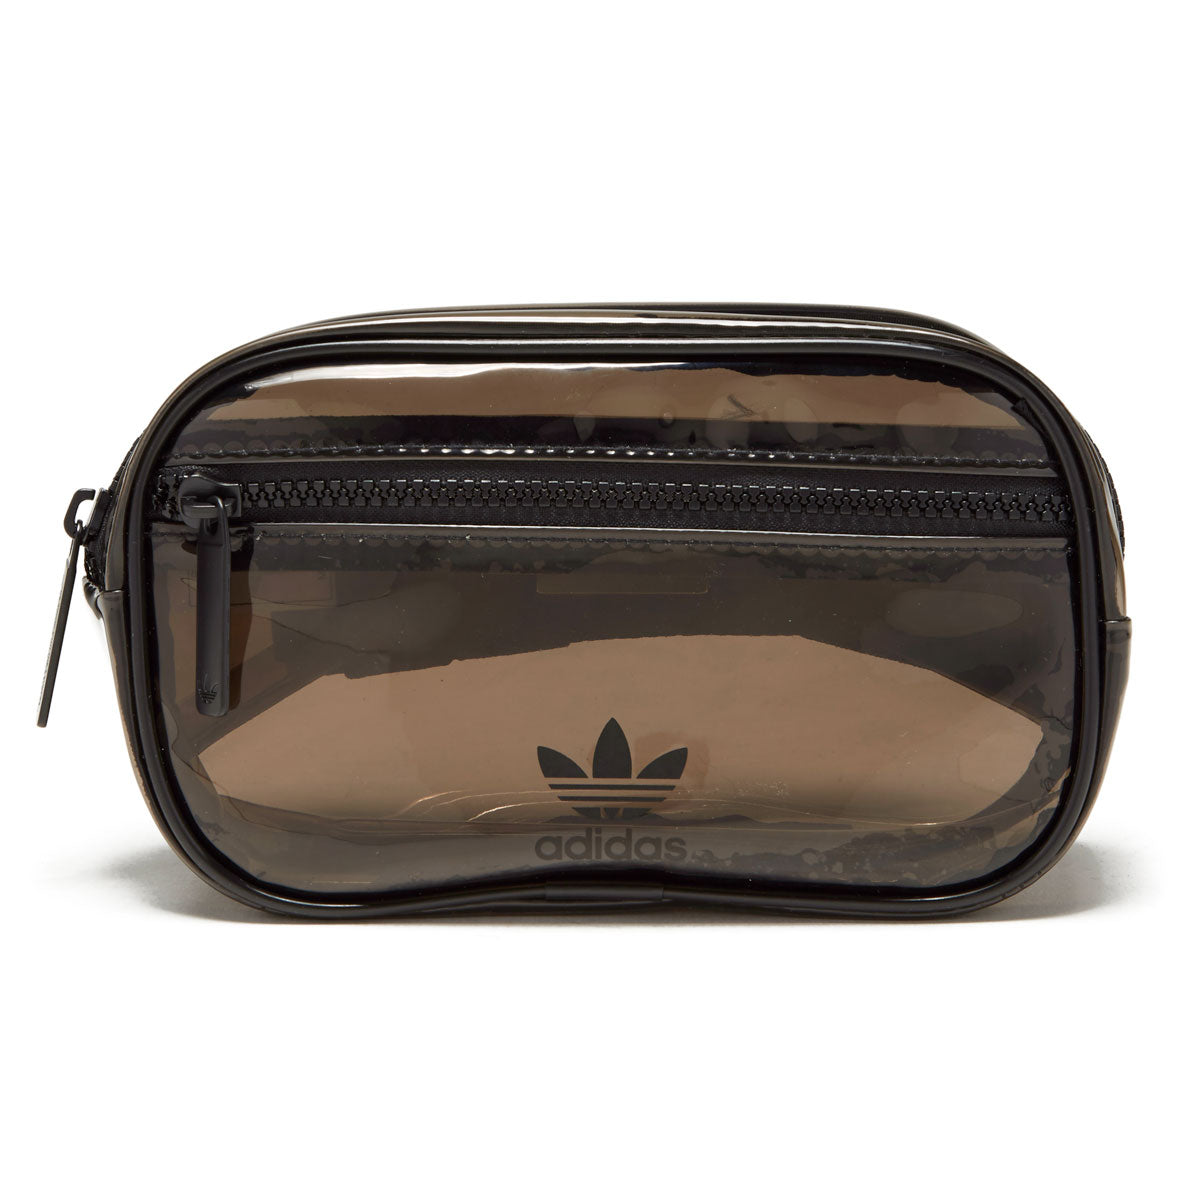 Adidas Originals Tinted Waist Pack
 Bag - Carbon Grey/Black image 1